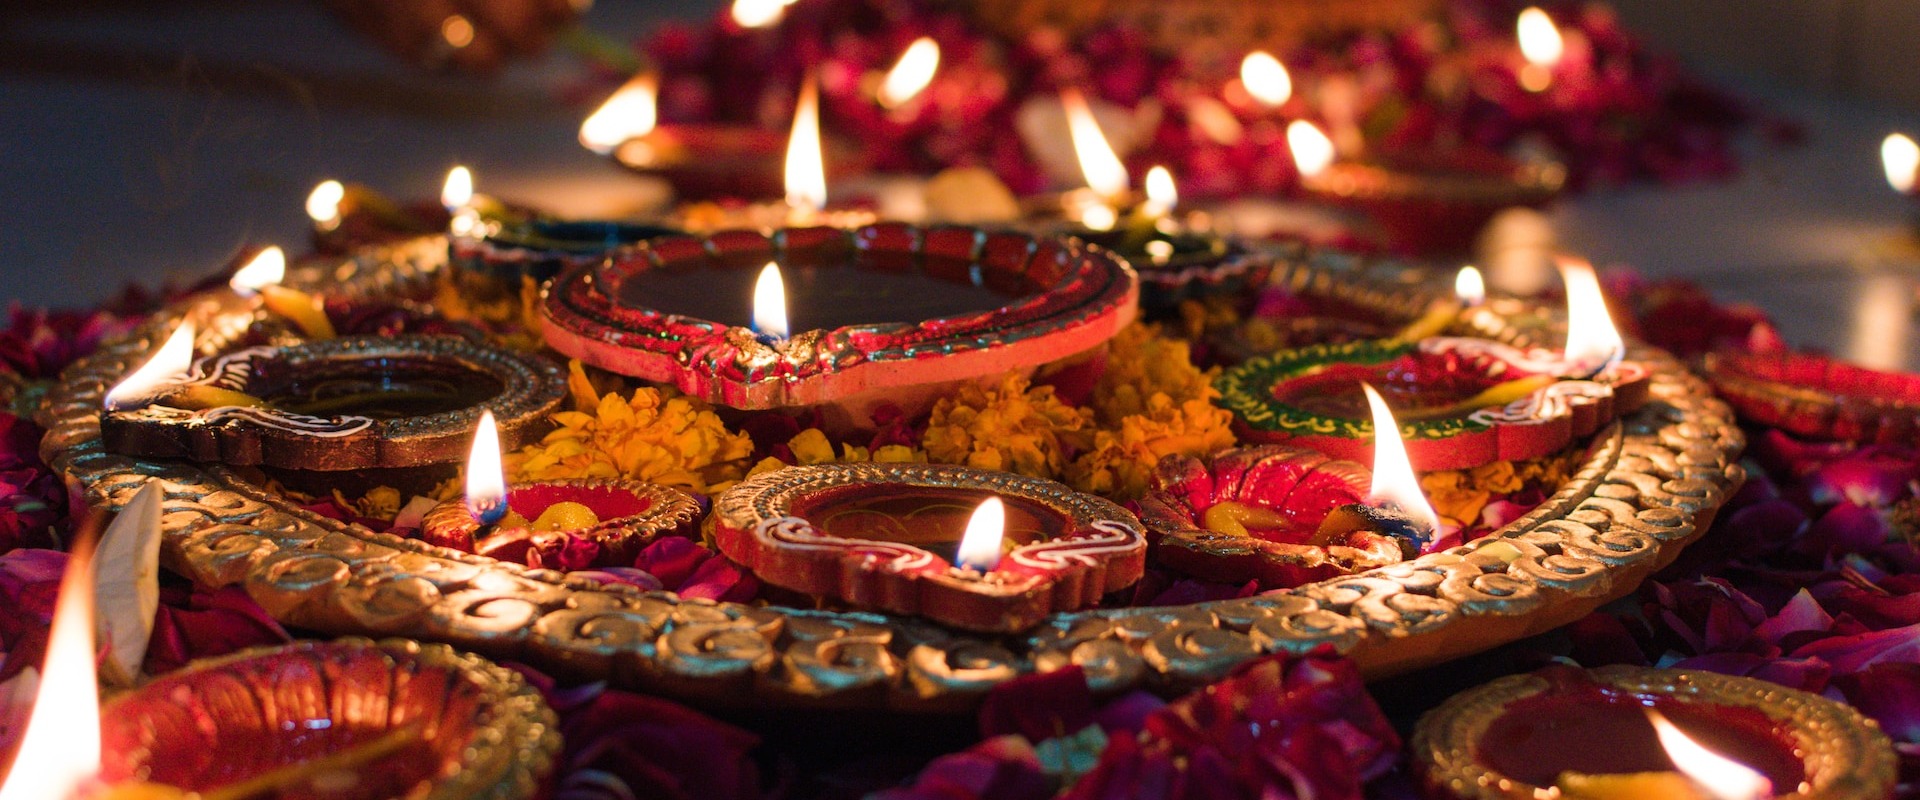 bondi-chai-diwali-festival-of-lights-udayaditya-barua-header